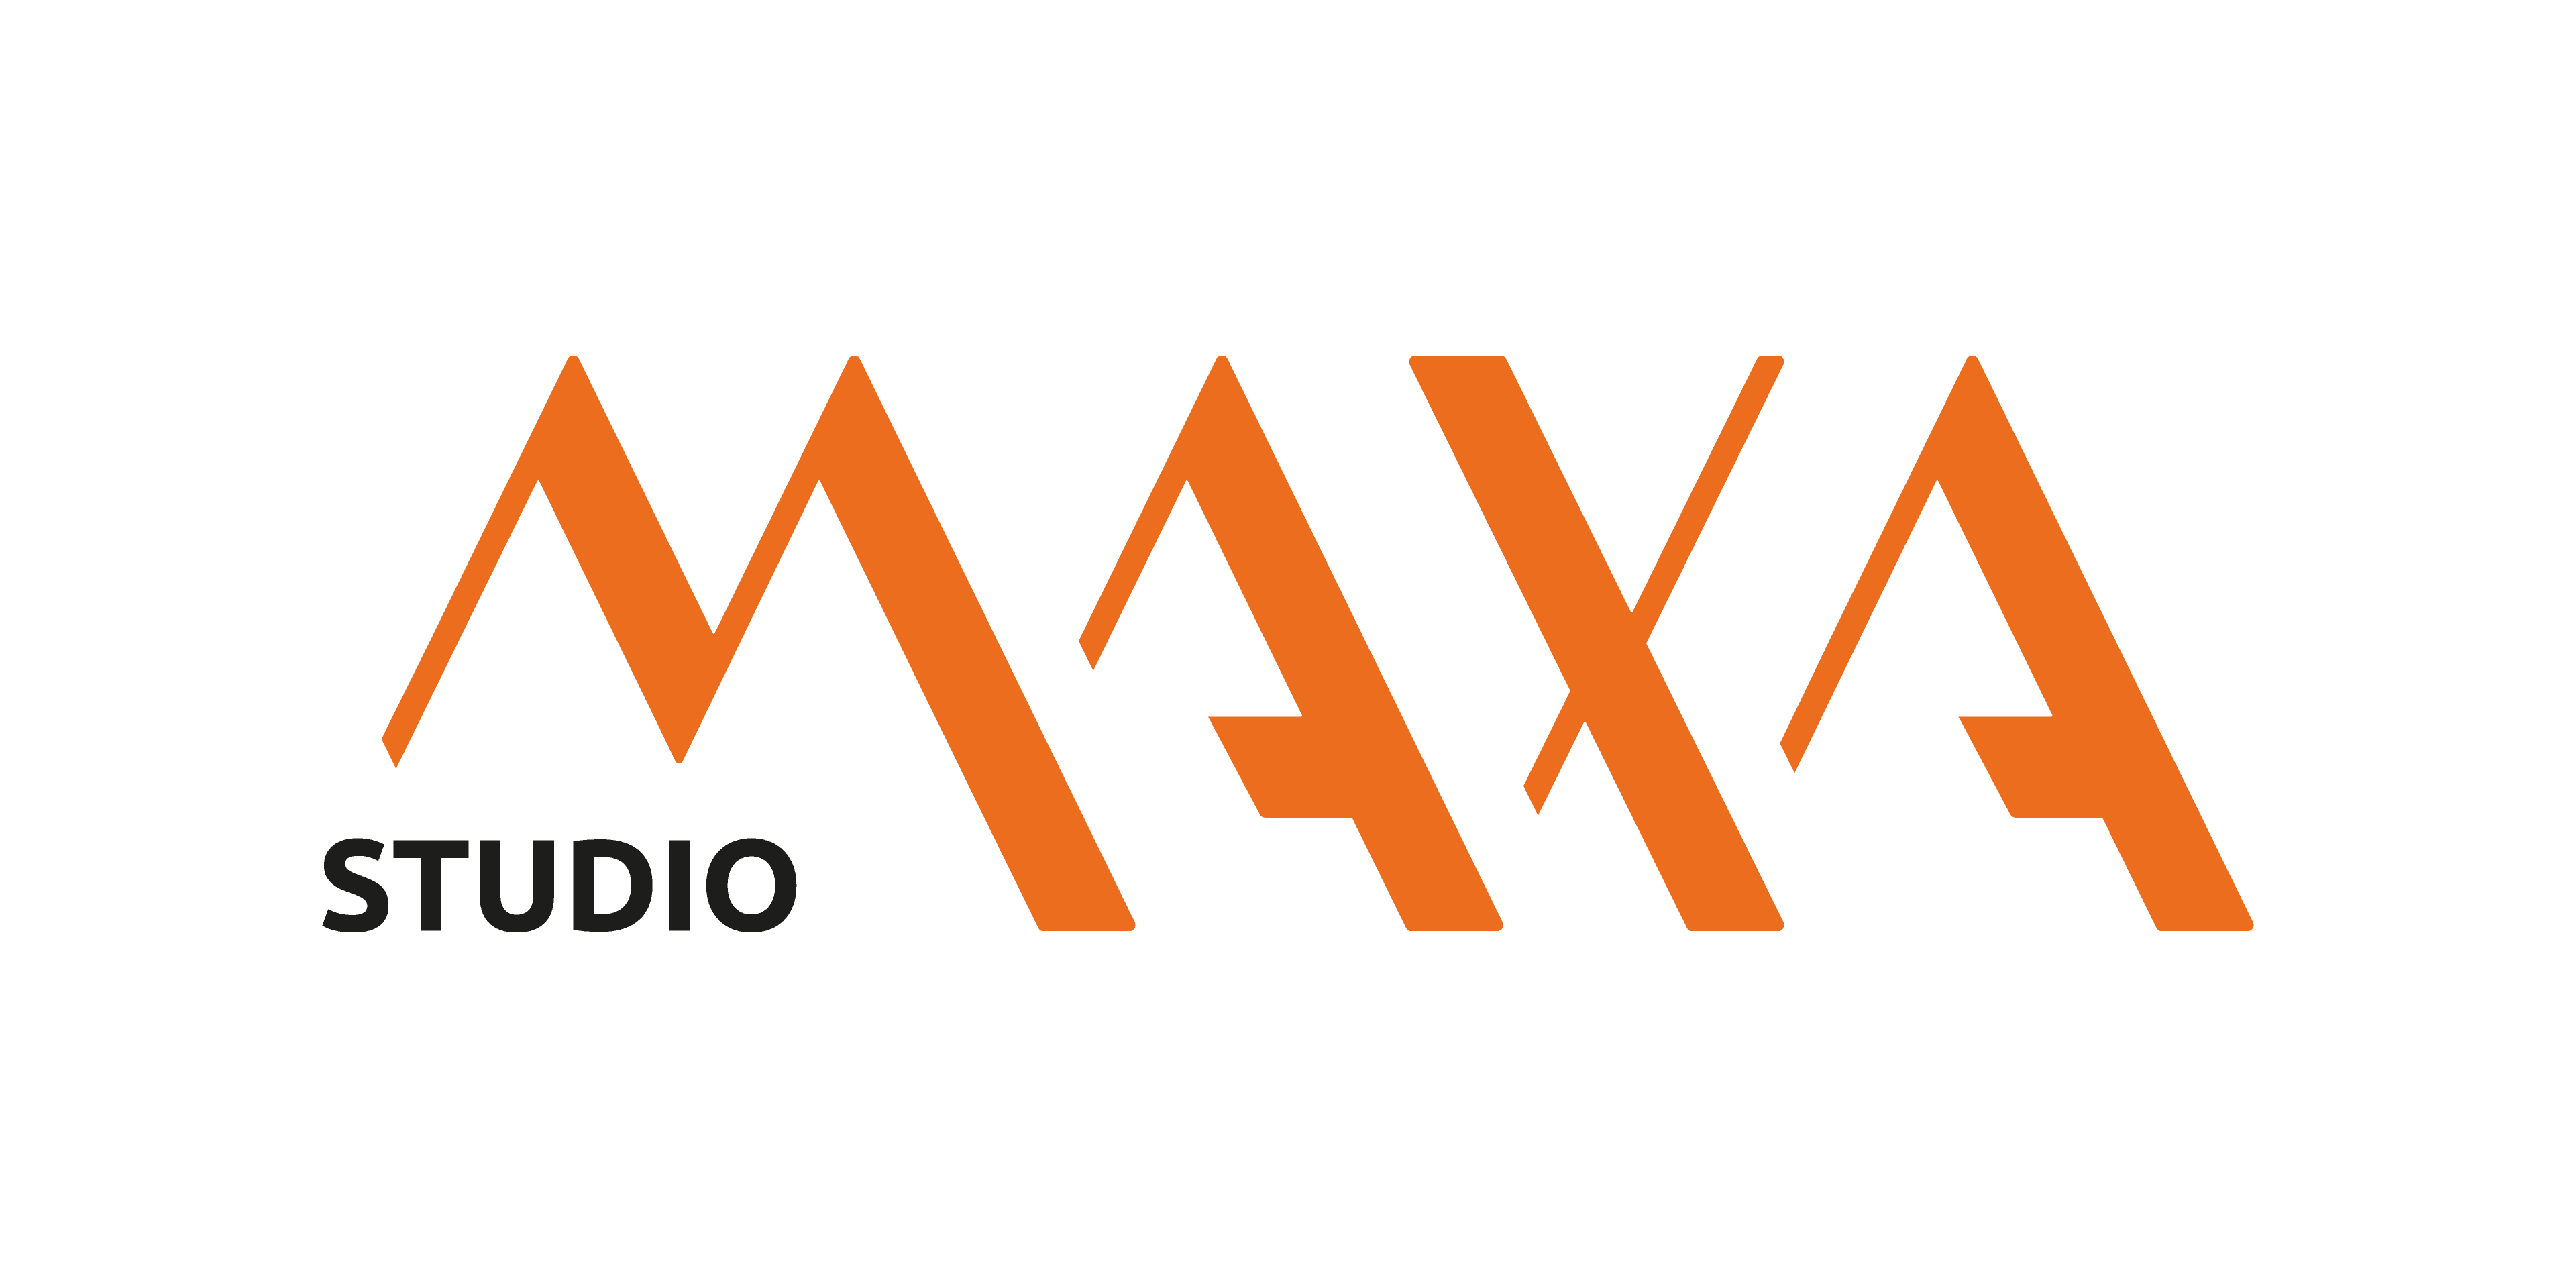 Studio-Maxa-Esteso-ArancioNero